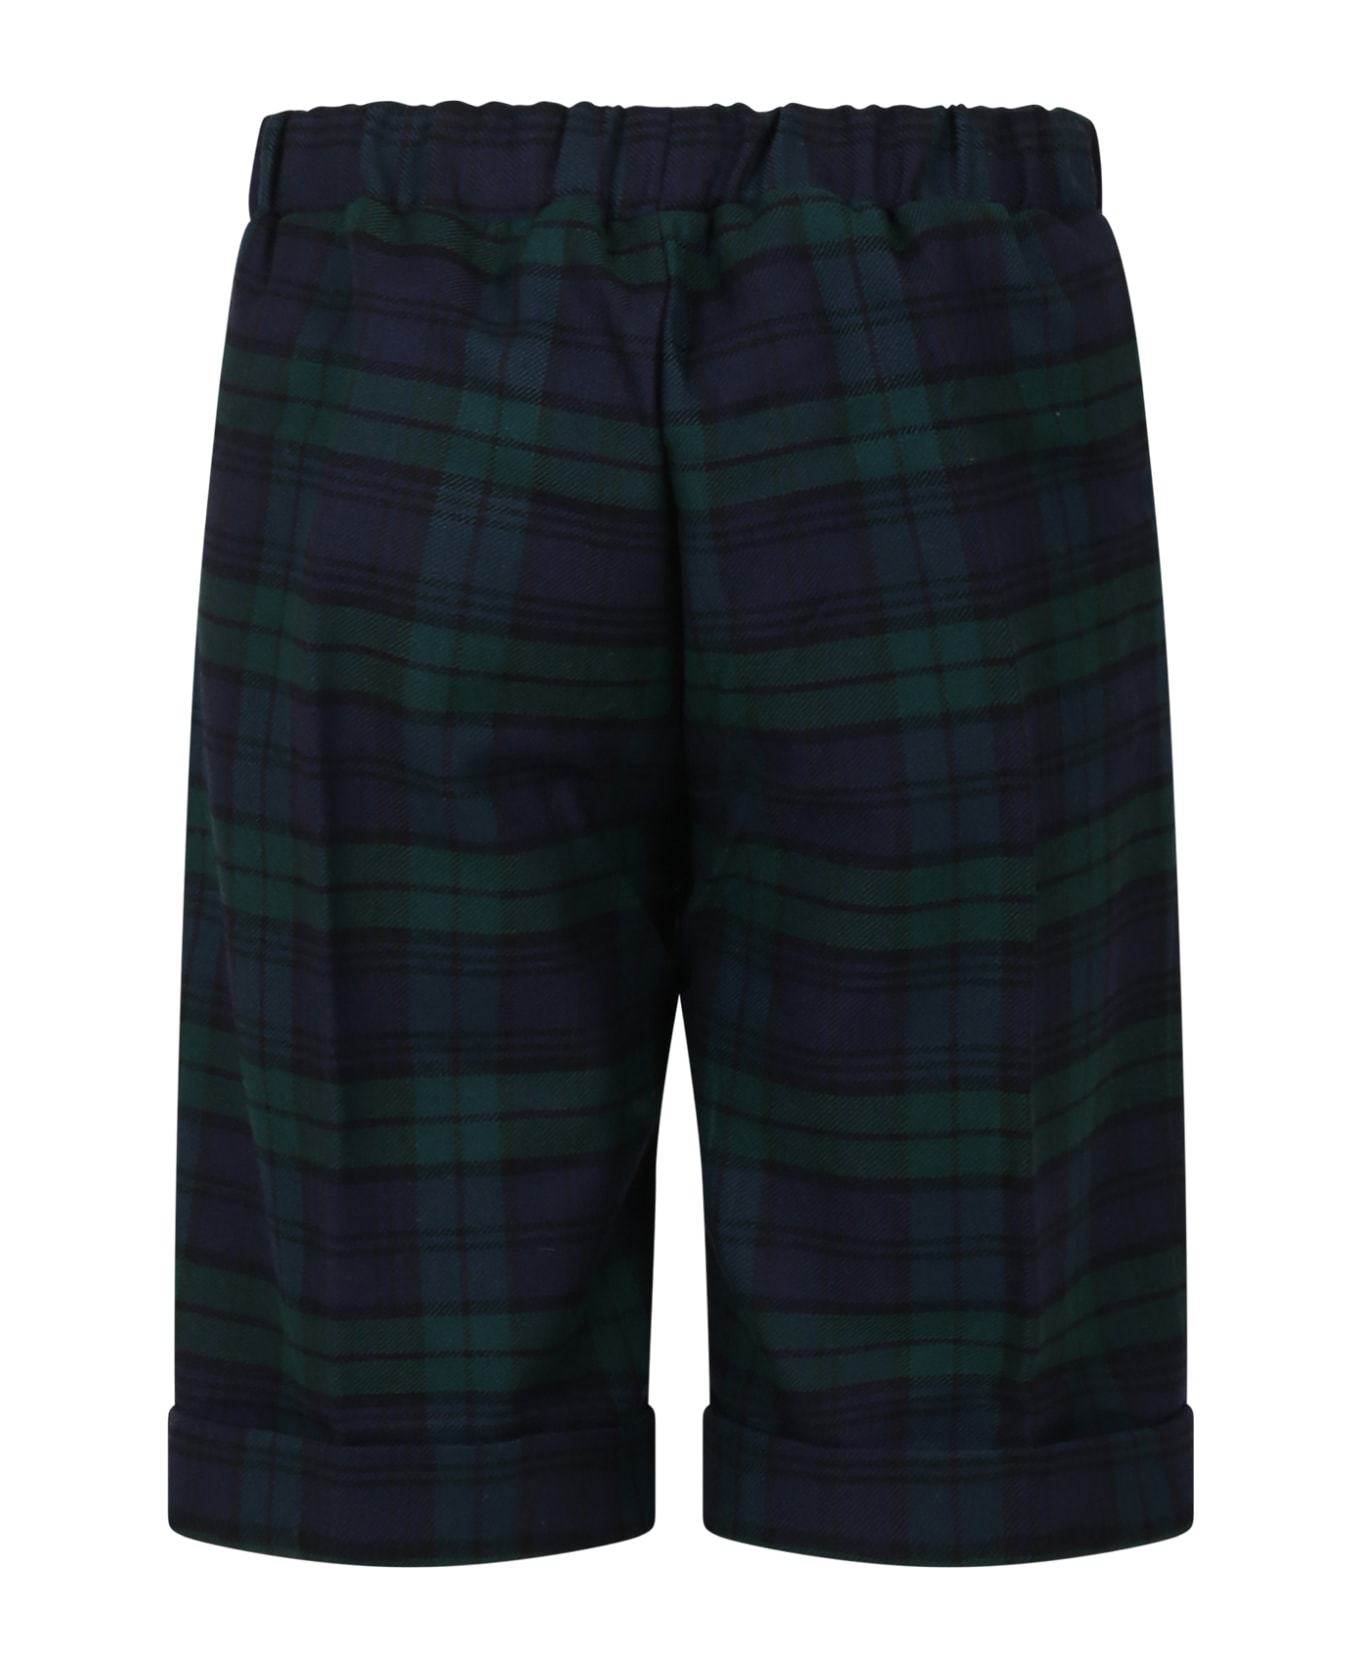 La stupenderia Green Shorts For Boy - Green ボトムス